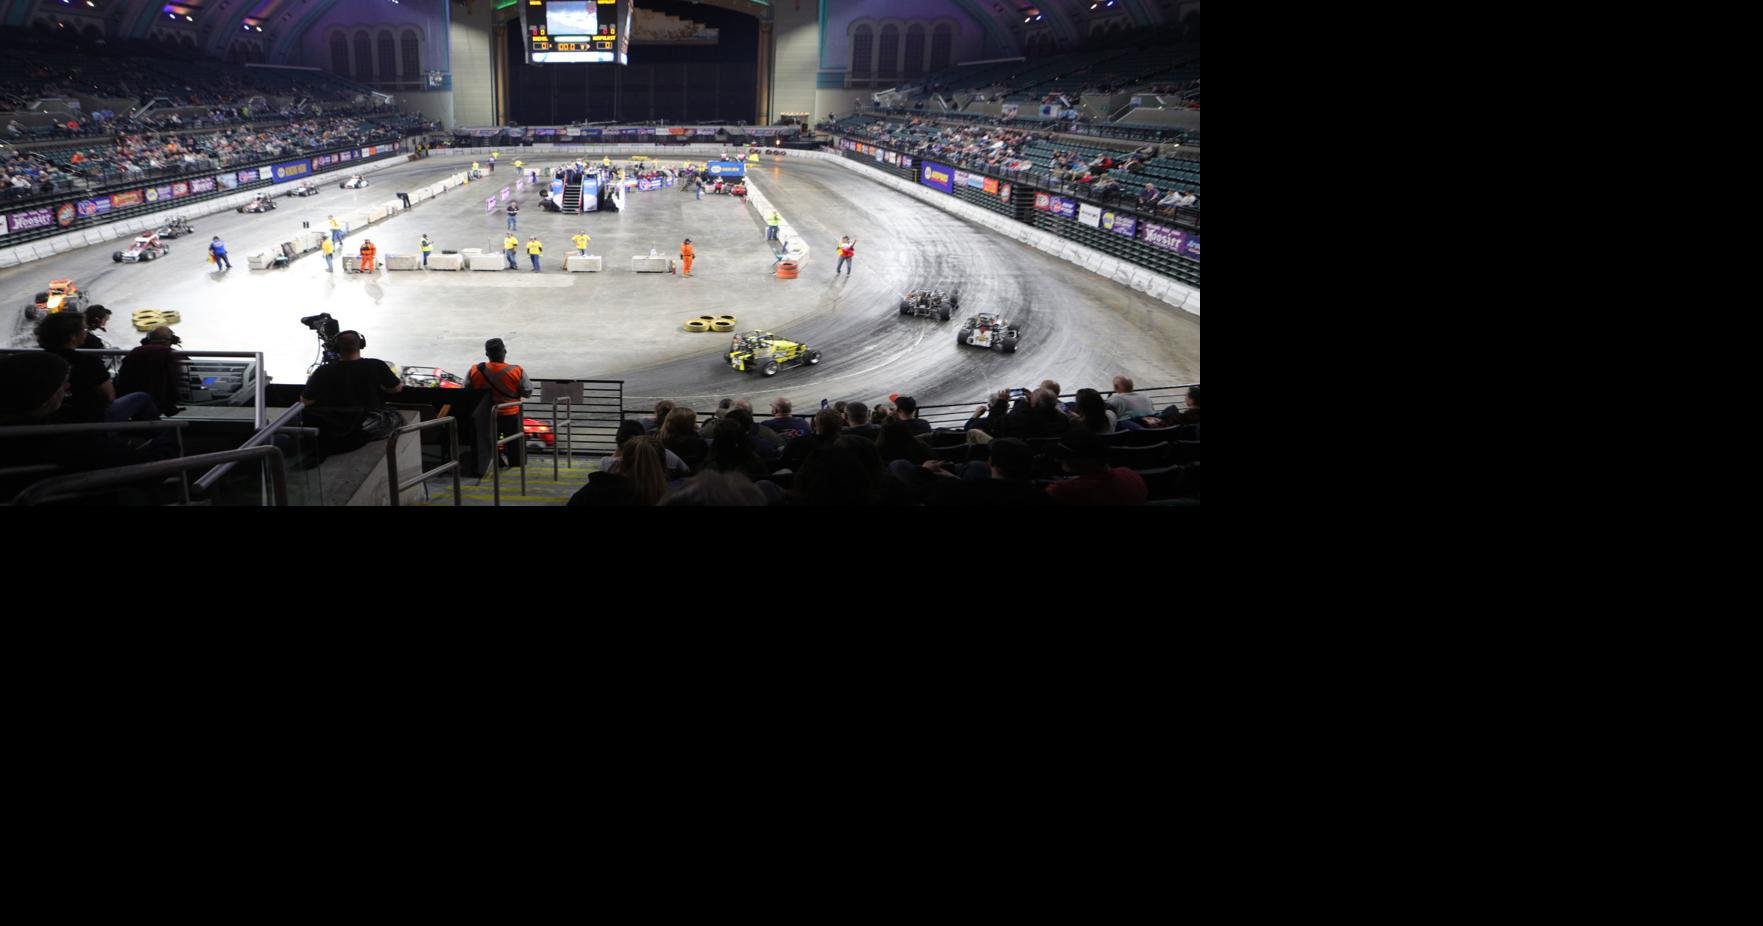 Indoor auto racing returns to A.C. this weekend